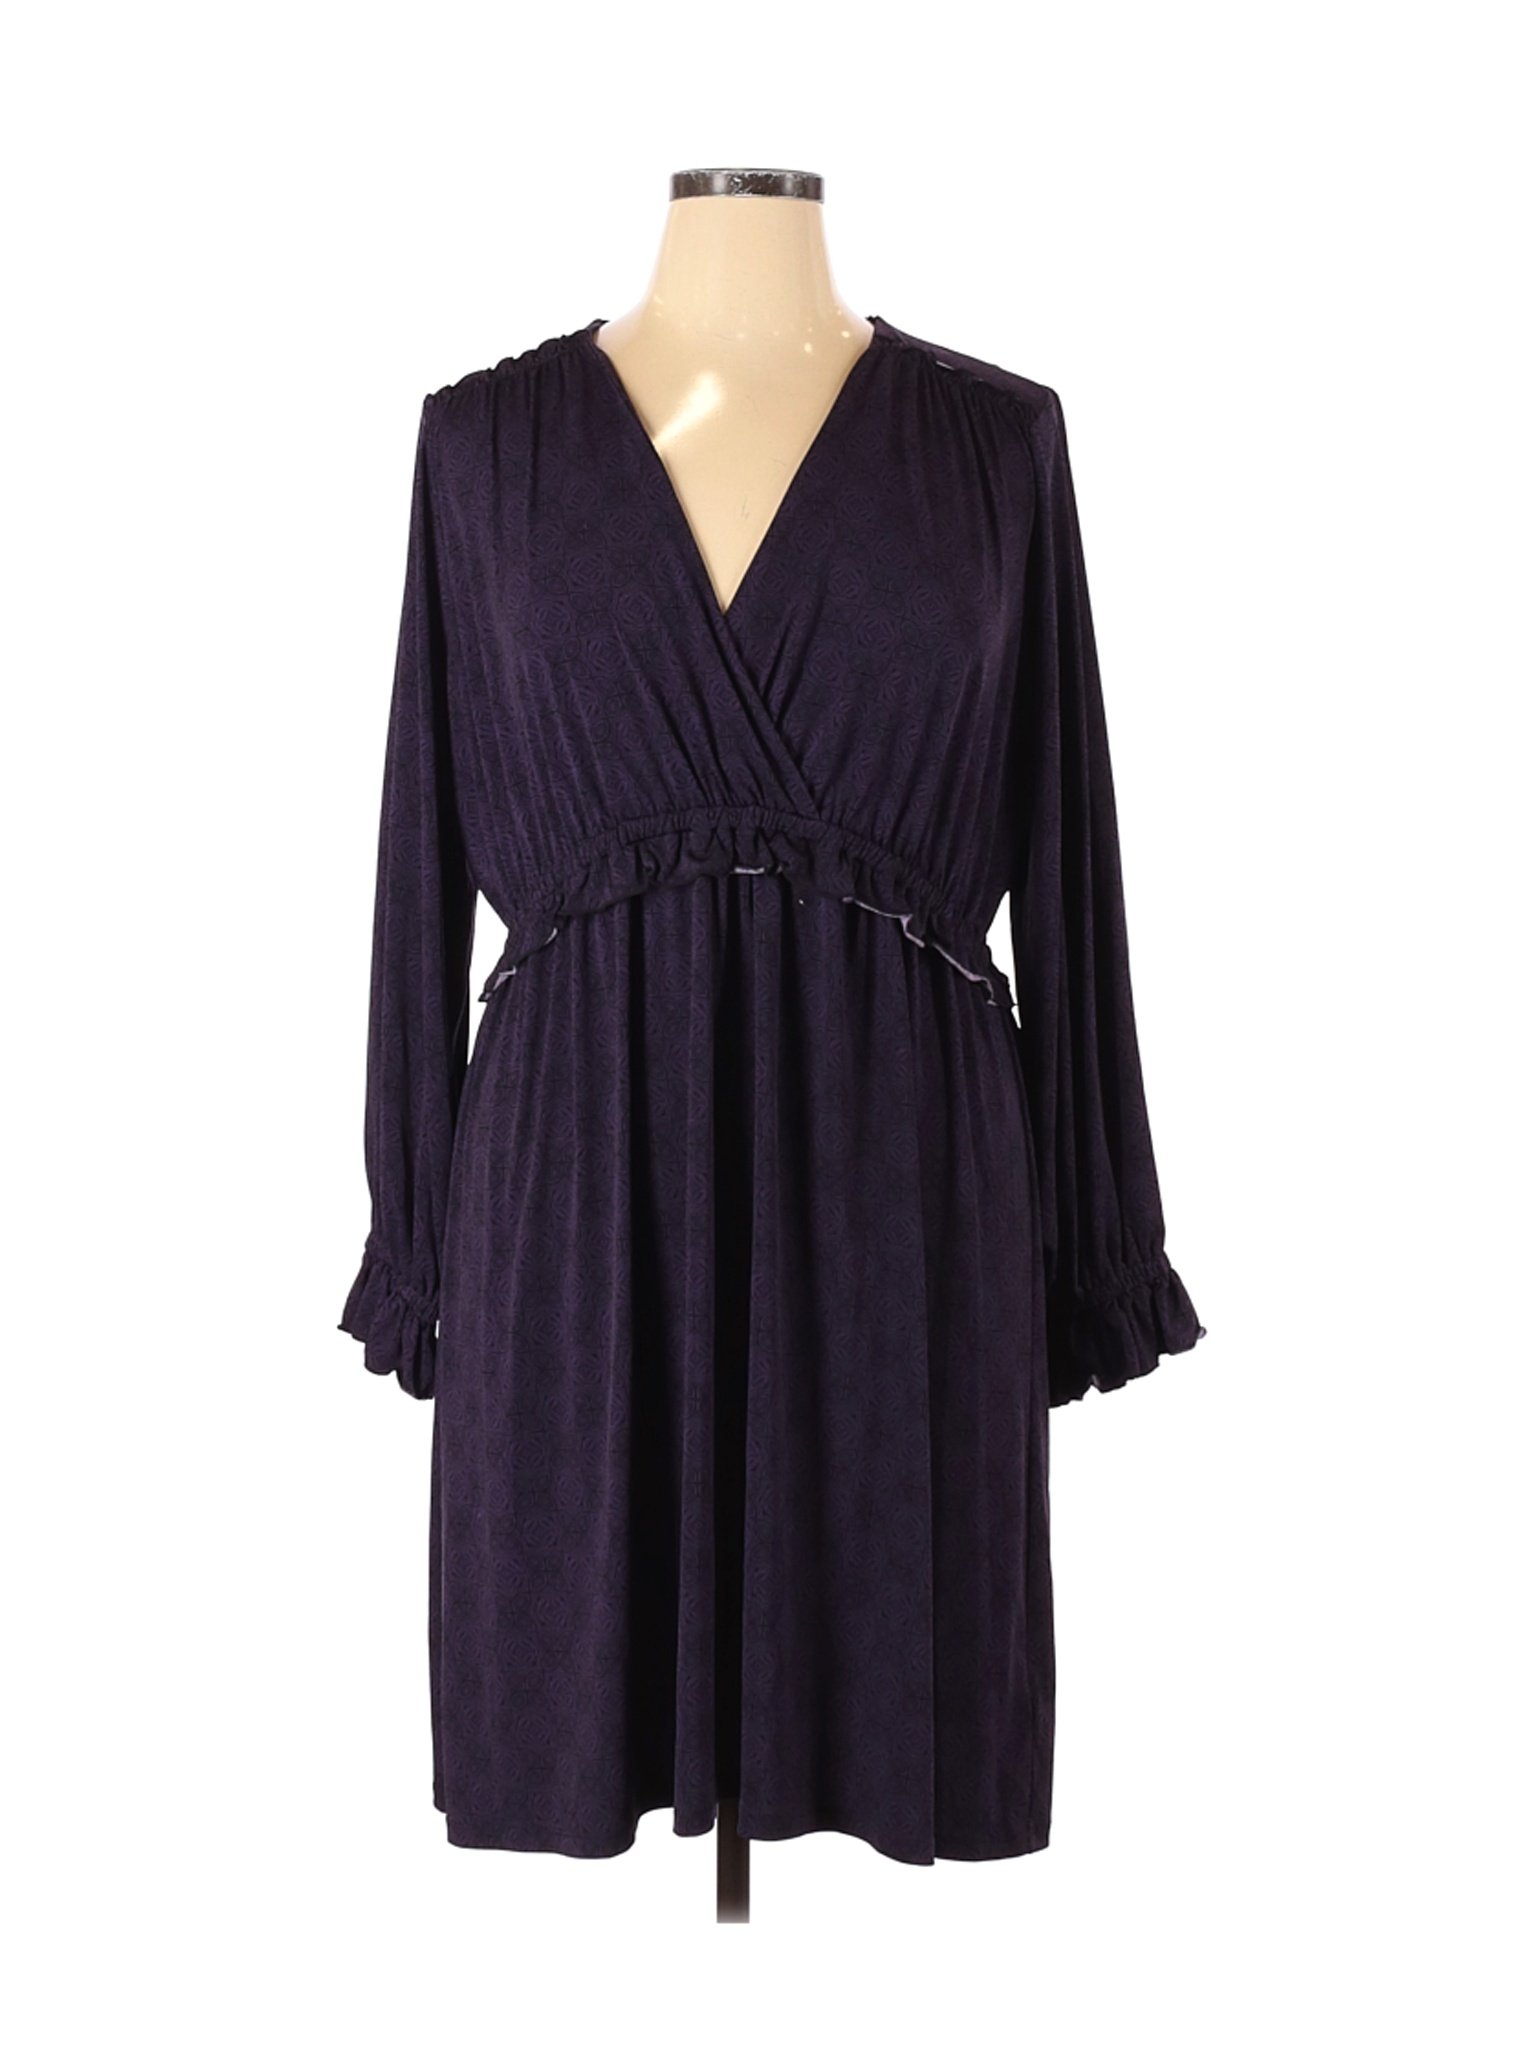 MICHAEL Michael Kors Women Purple Cocktail Dress 1X Plus | eBay